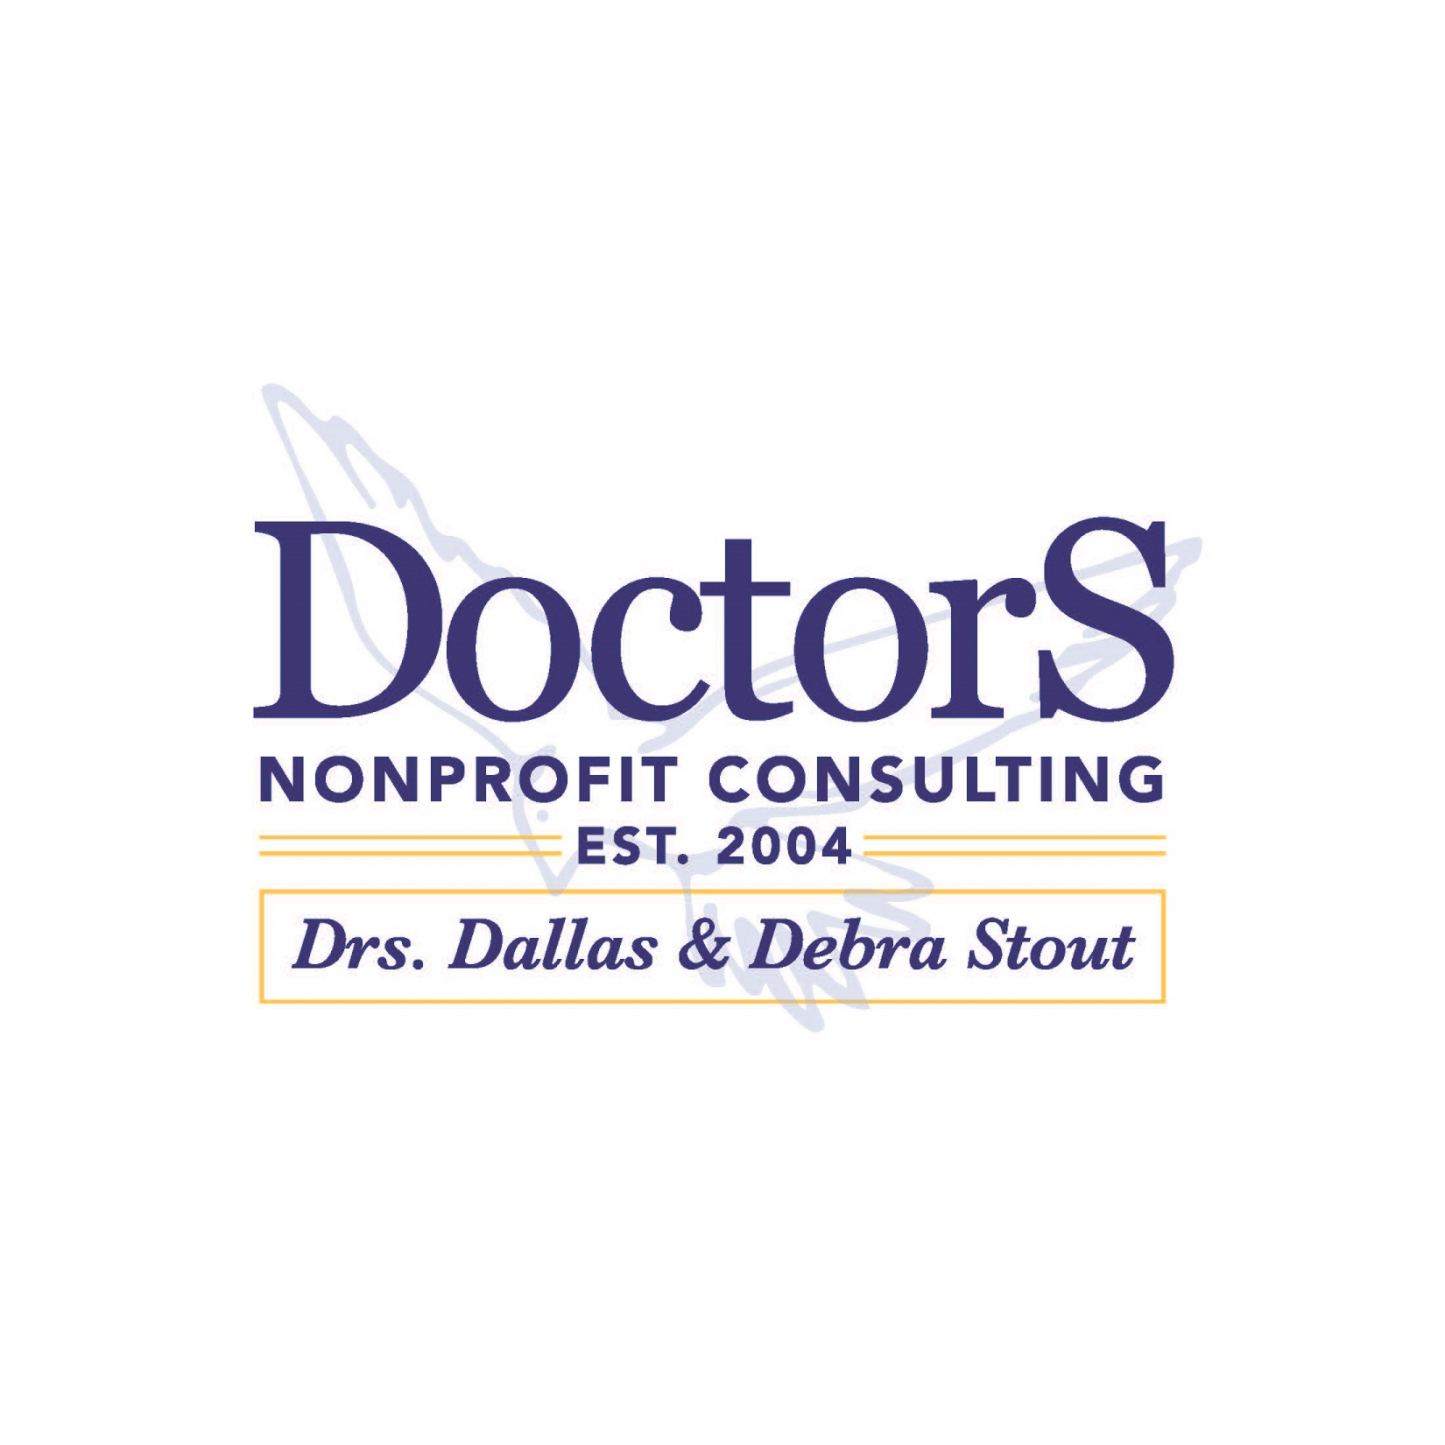 DoctorsConsulting Logo